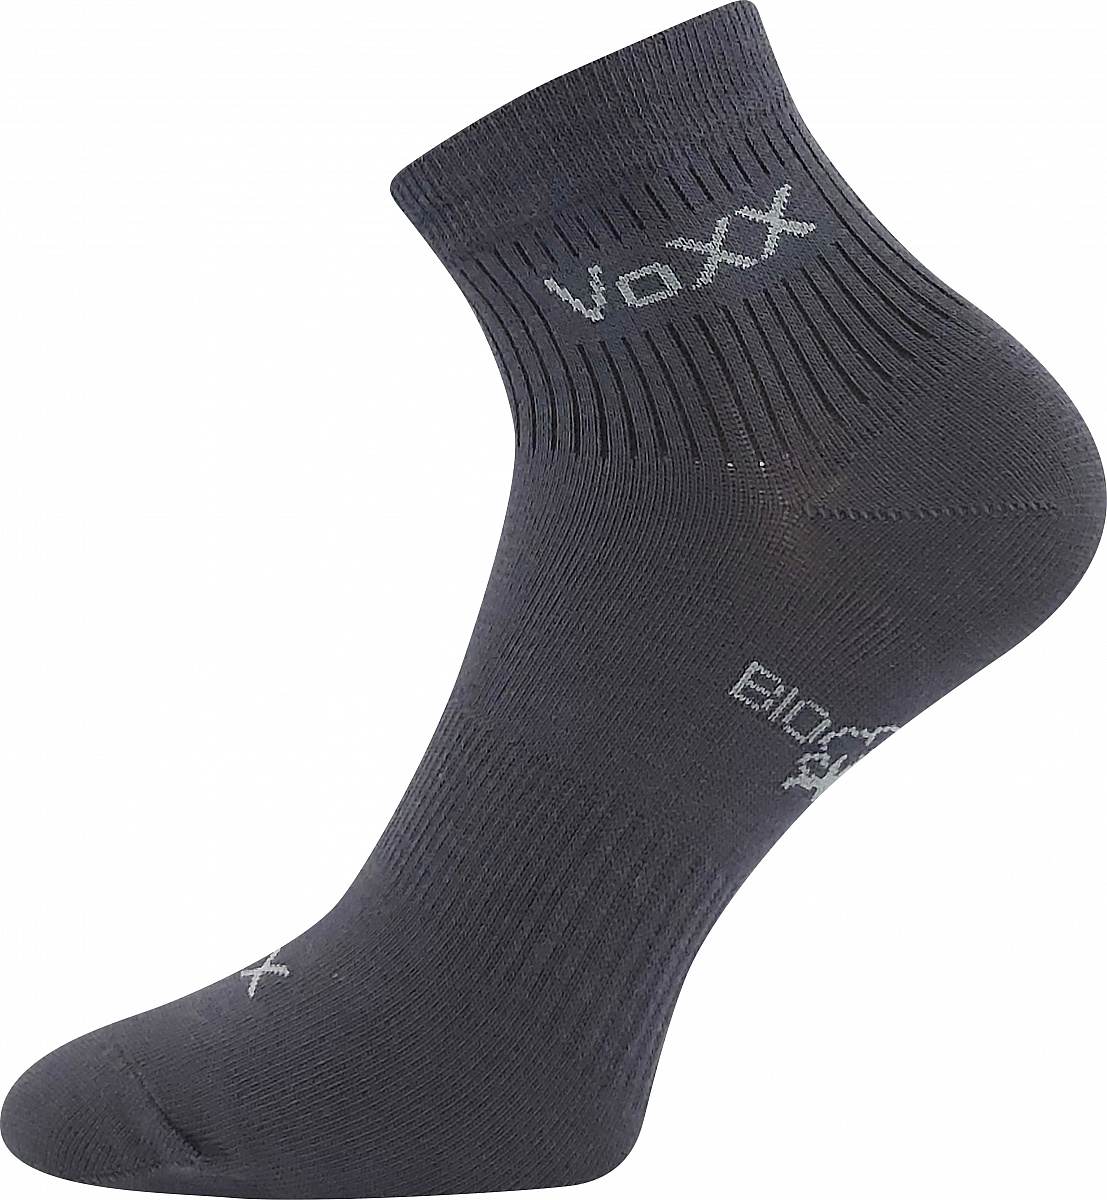 Ponožky VoXX - Boby, tmavě šedá Barva: Šedá, Velikost: 39-42